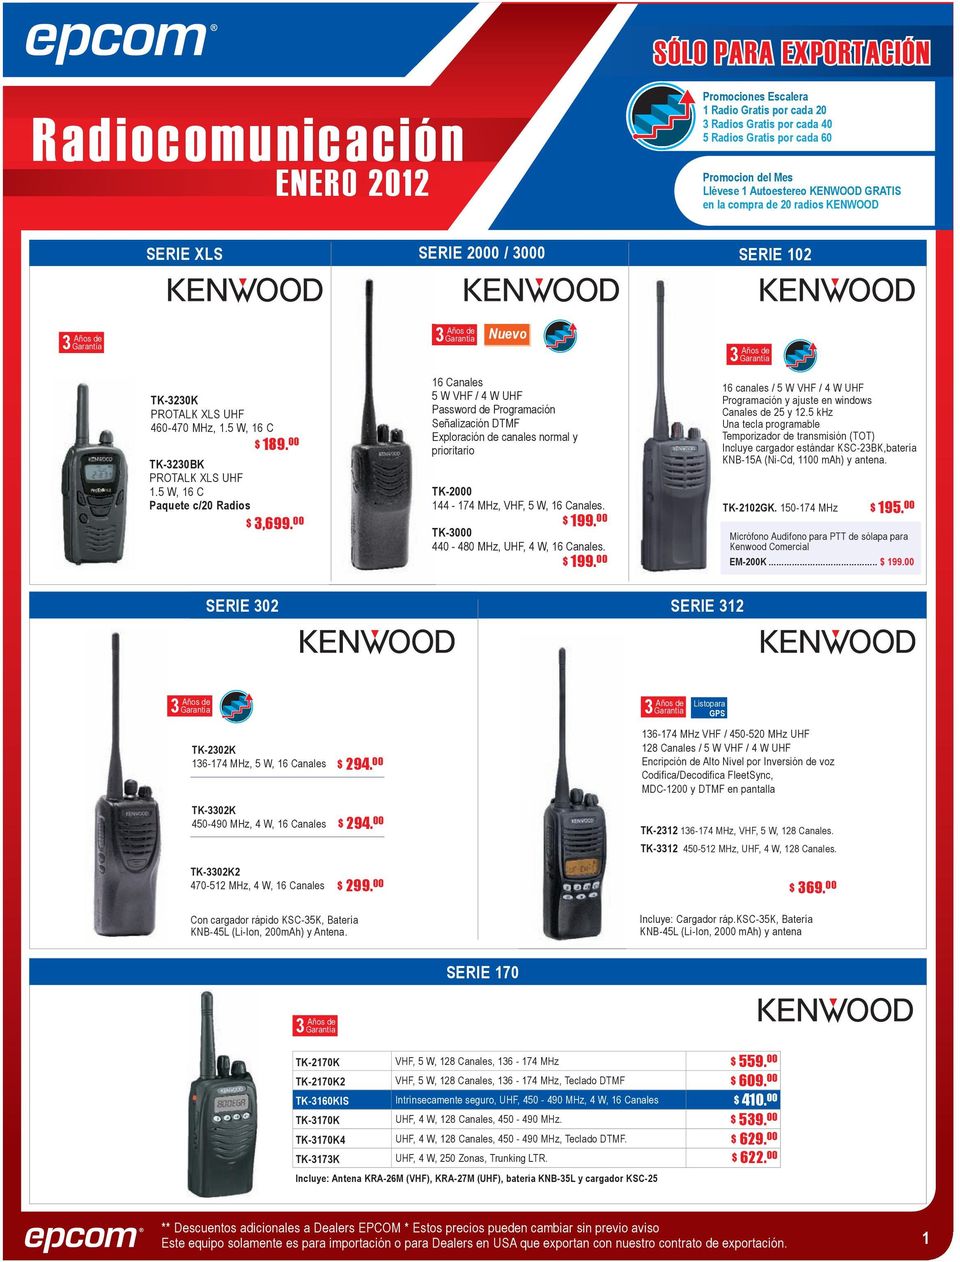 00 TK-3230BK PROTALK XLS UHF 1.5 W, 16 C Paquete c/20 Radios $ 3,699.